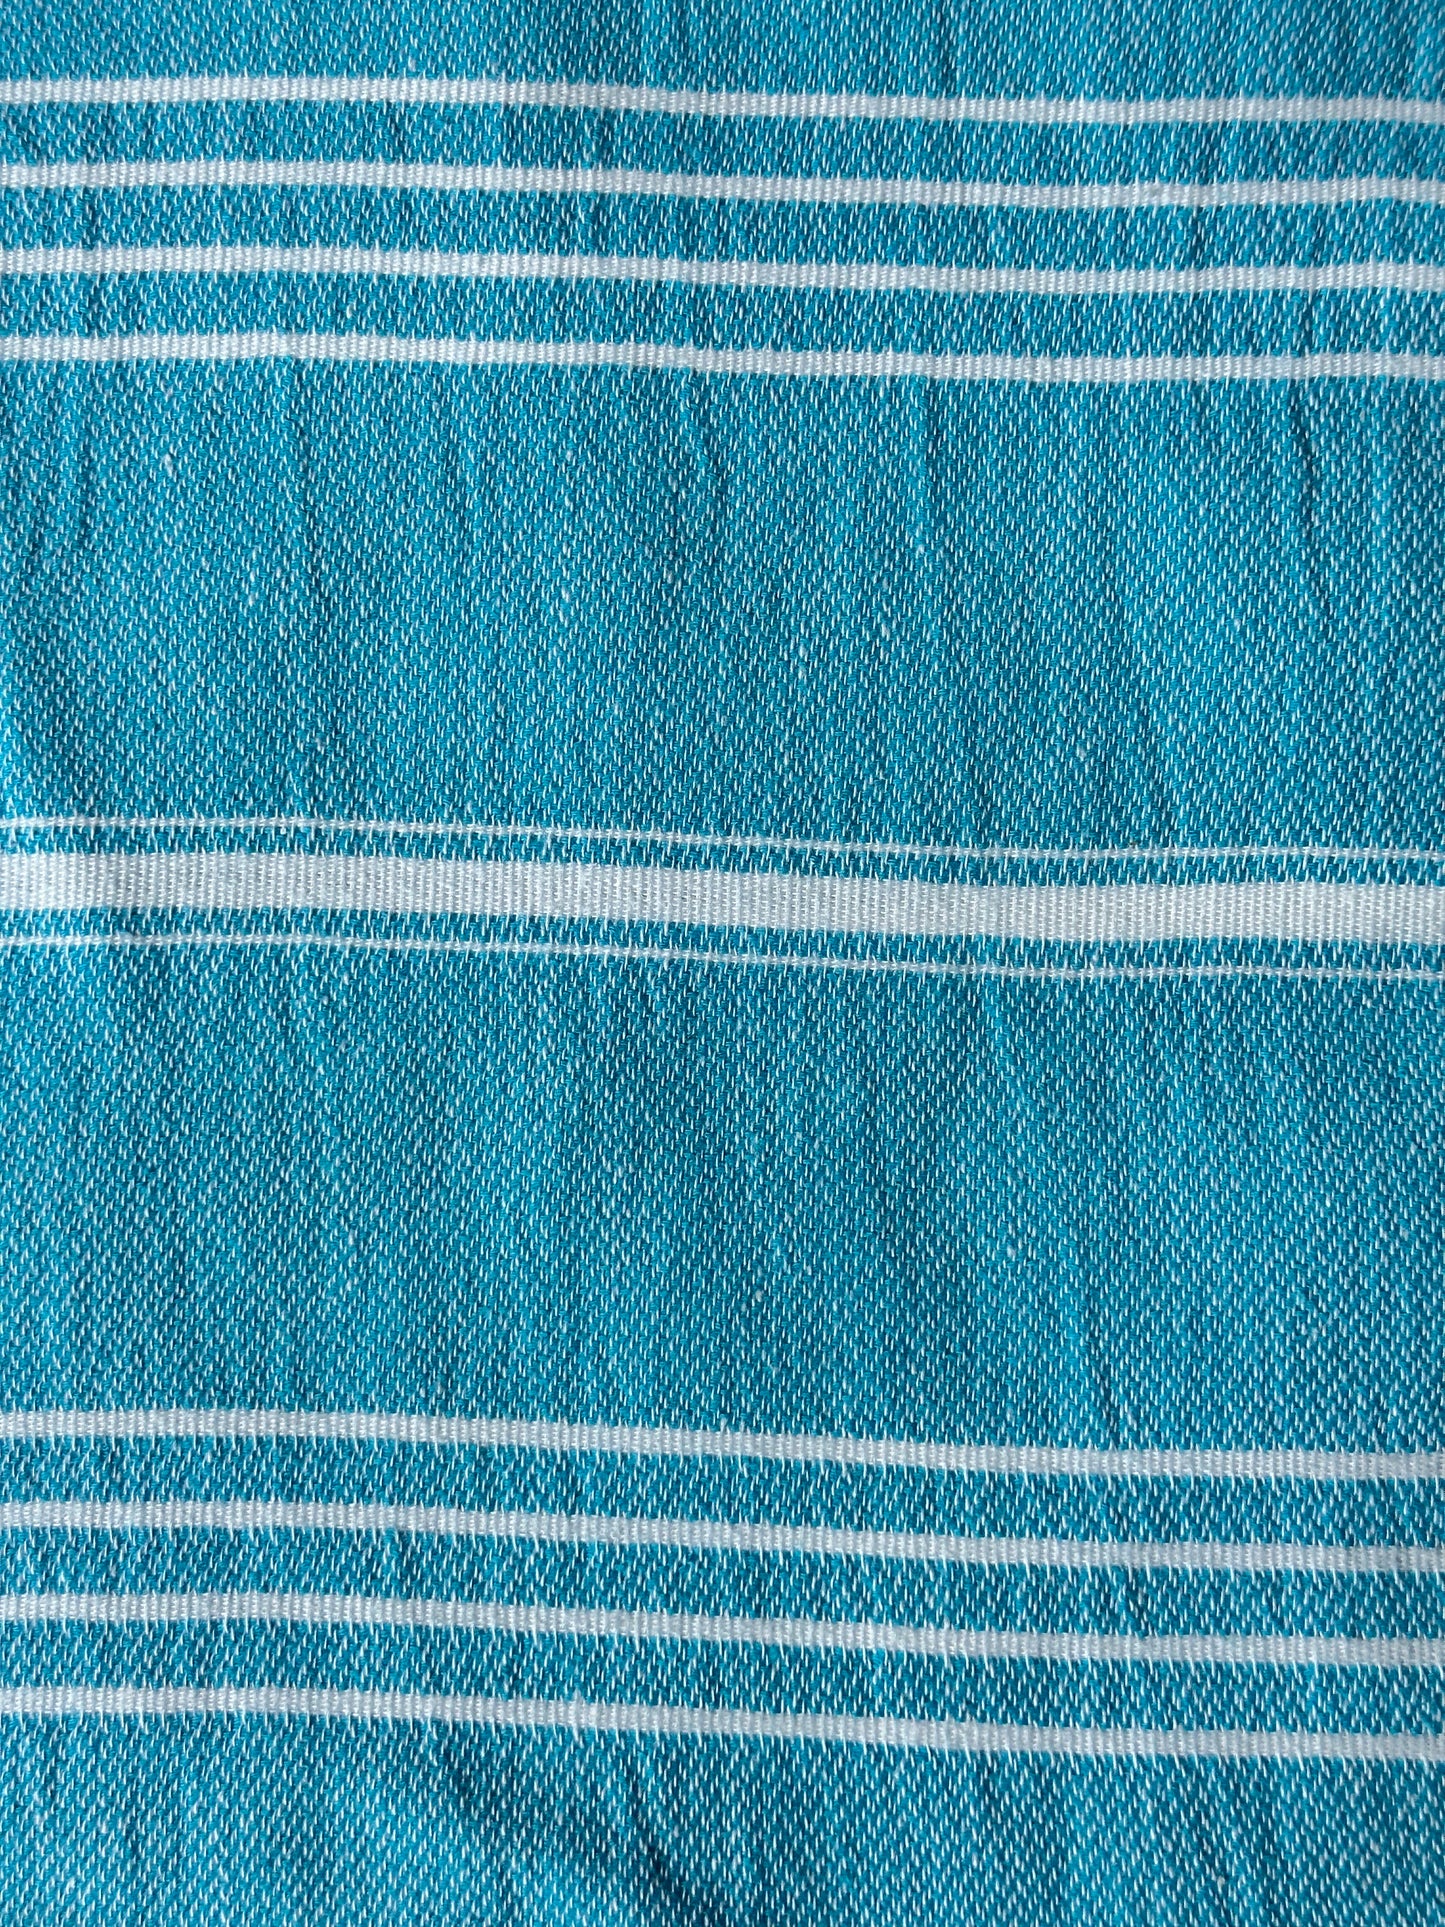 Classic Design Beach Towel